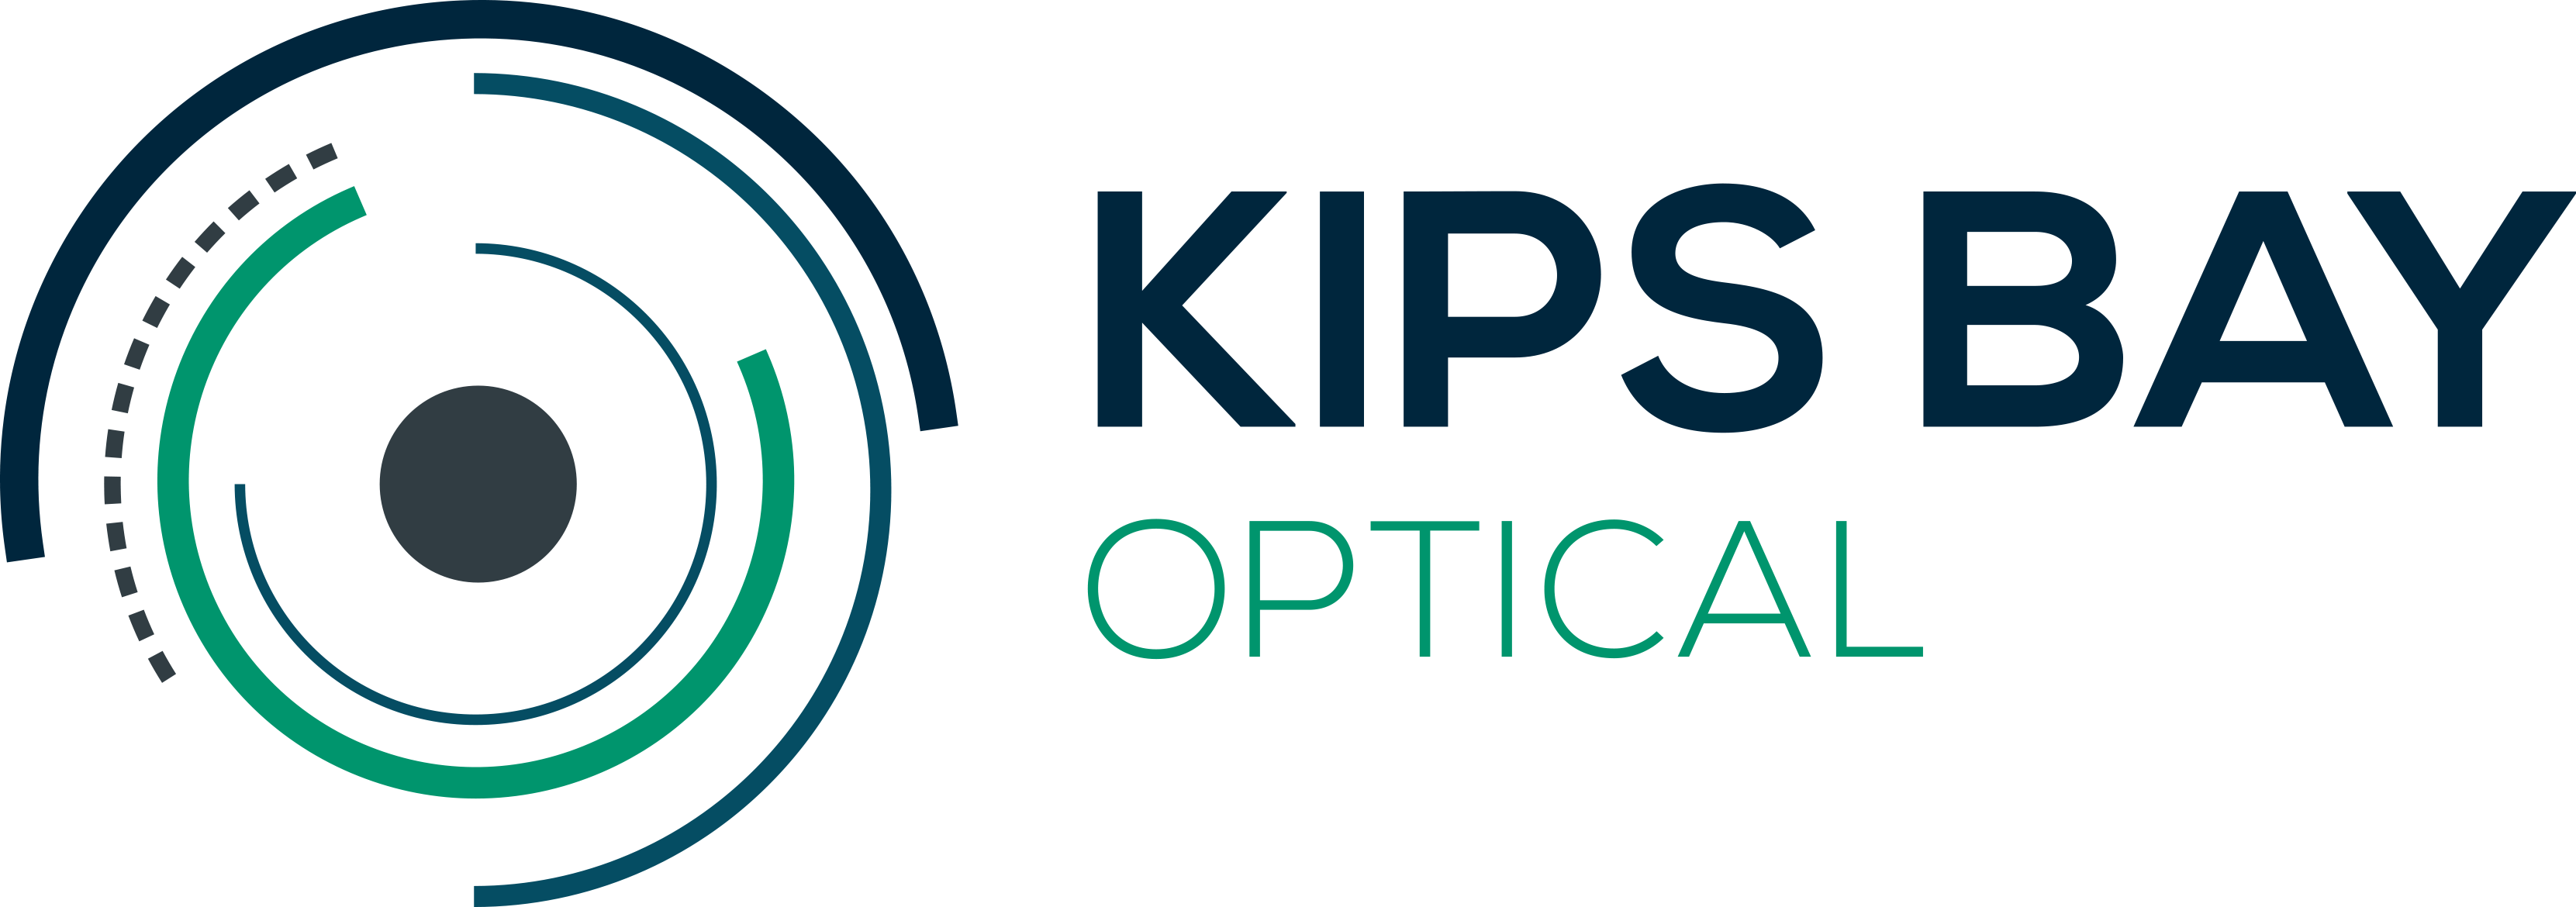 Kips Bay Optical